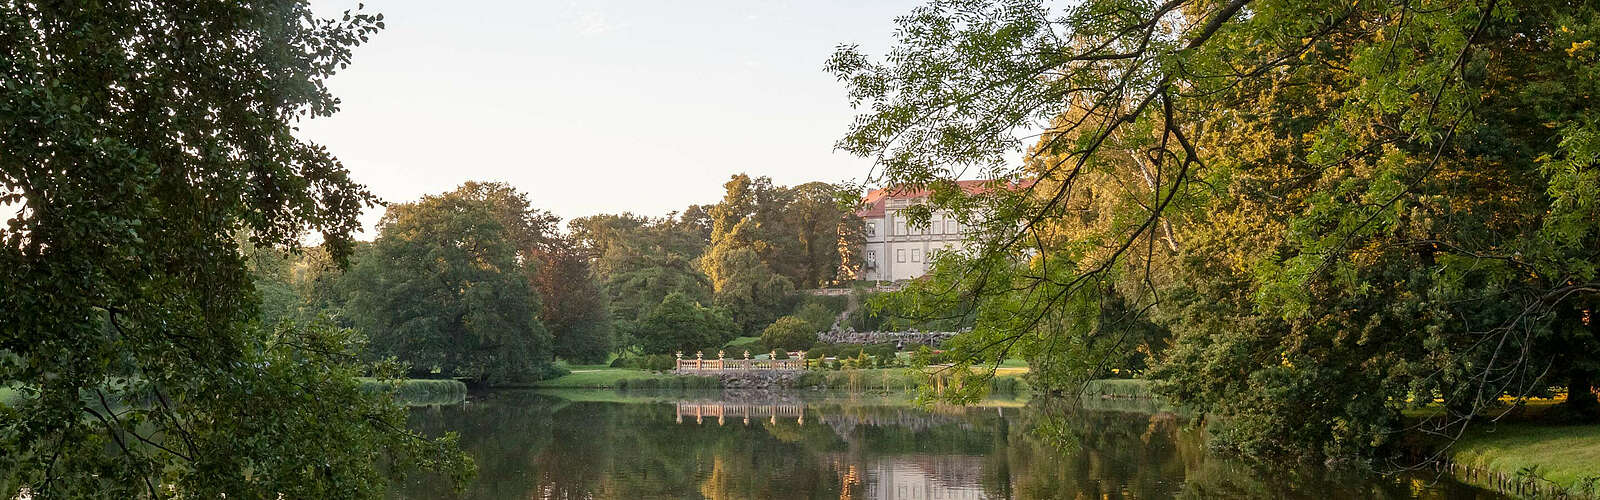 Schlosspark Wiesenburg,
        
    

        Foto: Tourismusverband Fläming e.V./Jedrzej Marzecki